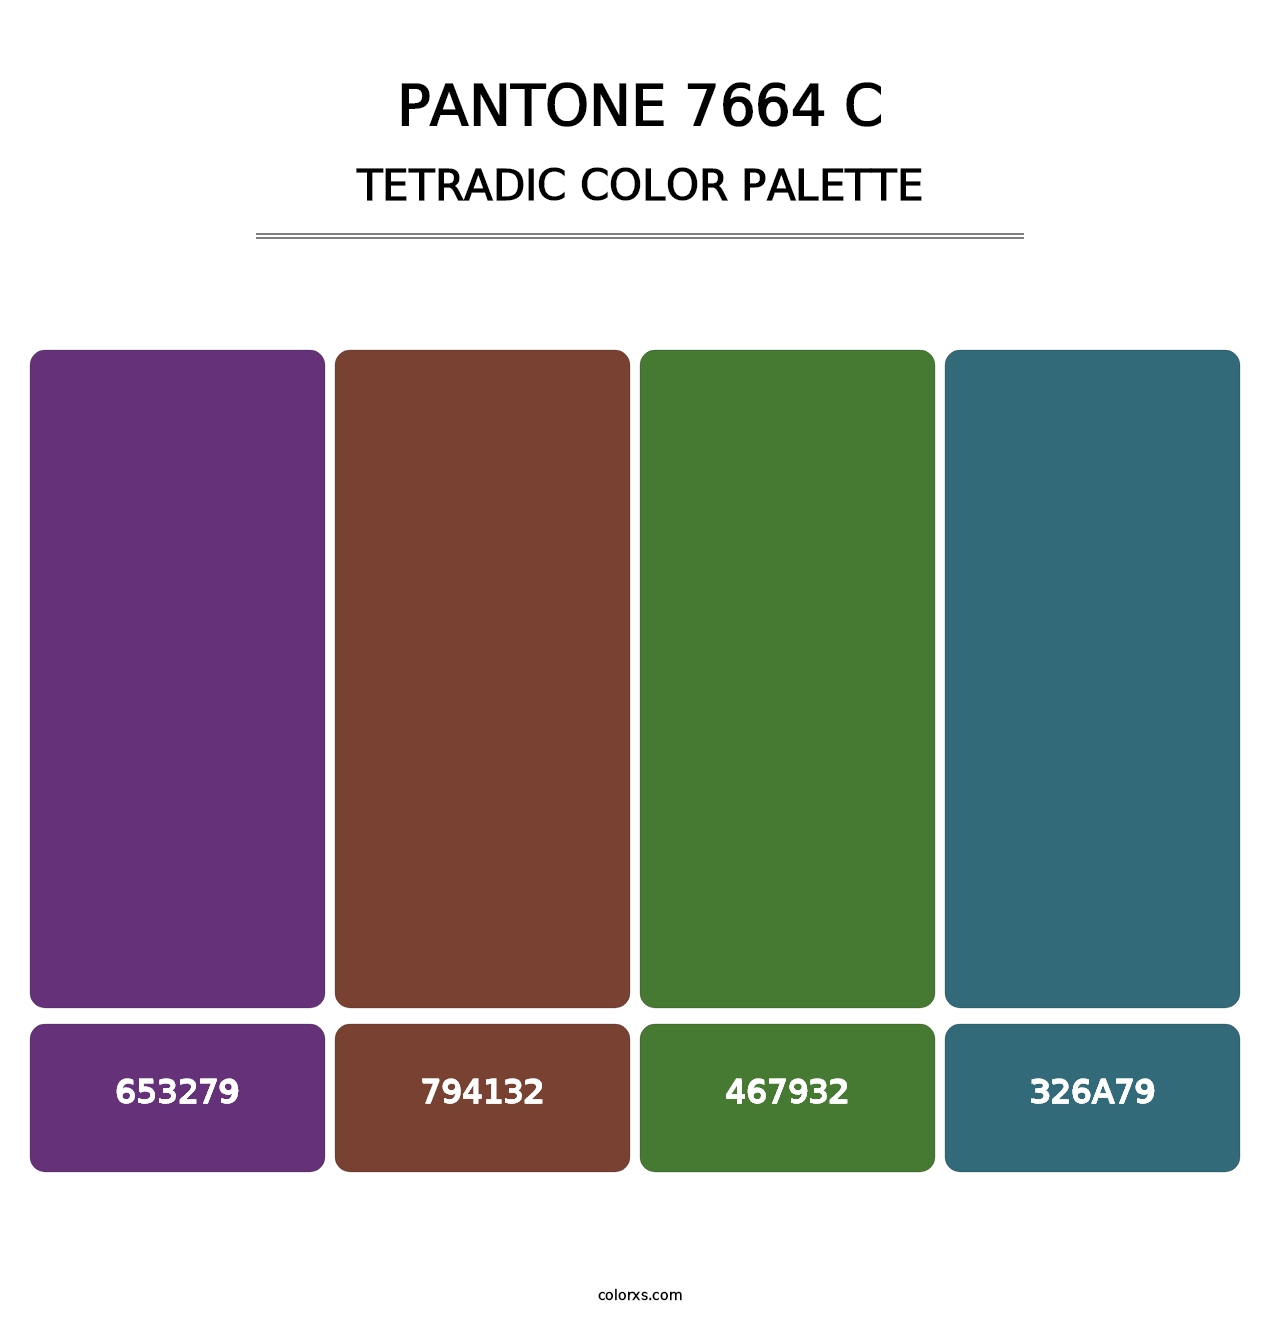 PANTONE 7664 C - Tetradic Color Palette